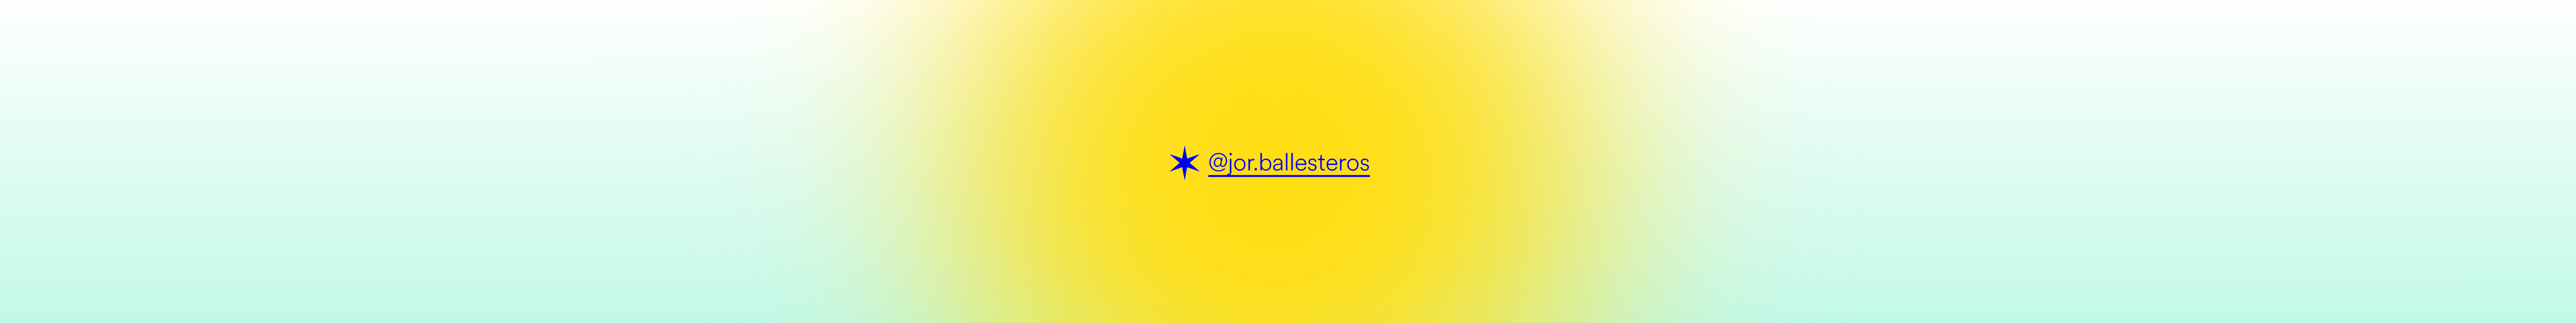 Jorge Ballesteros L.'s profile banner